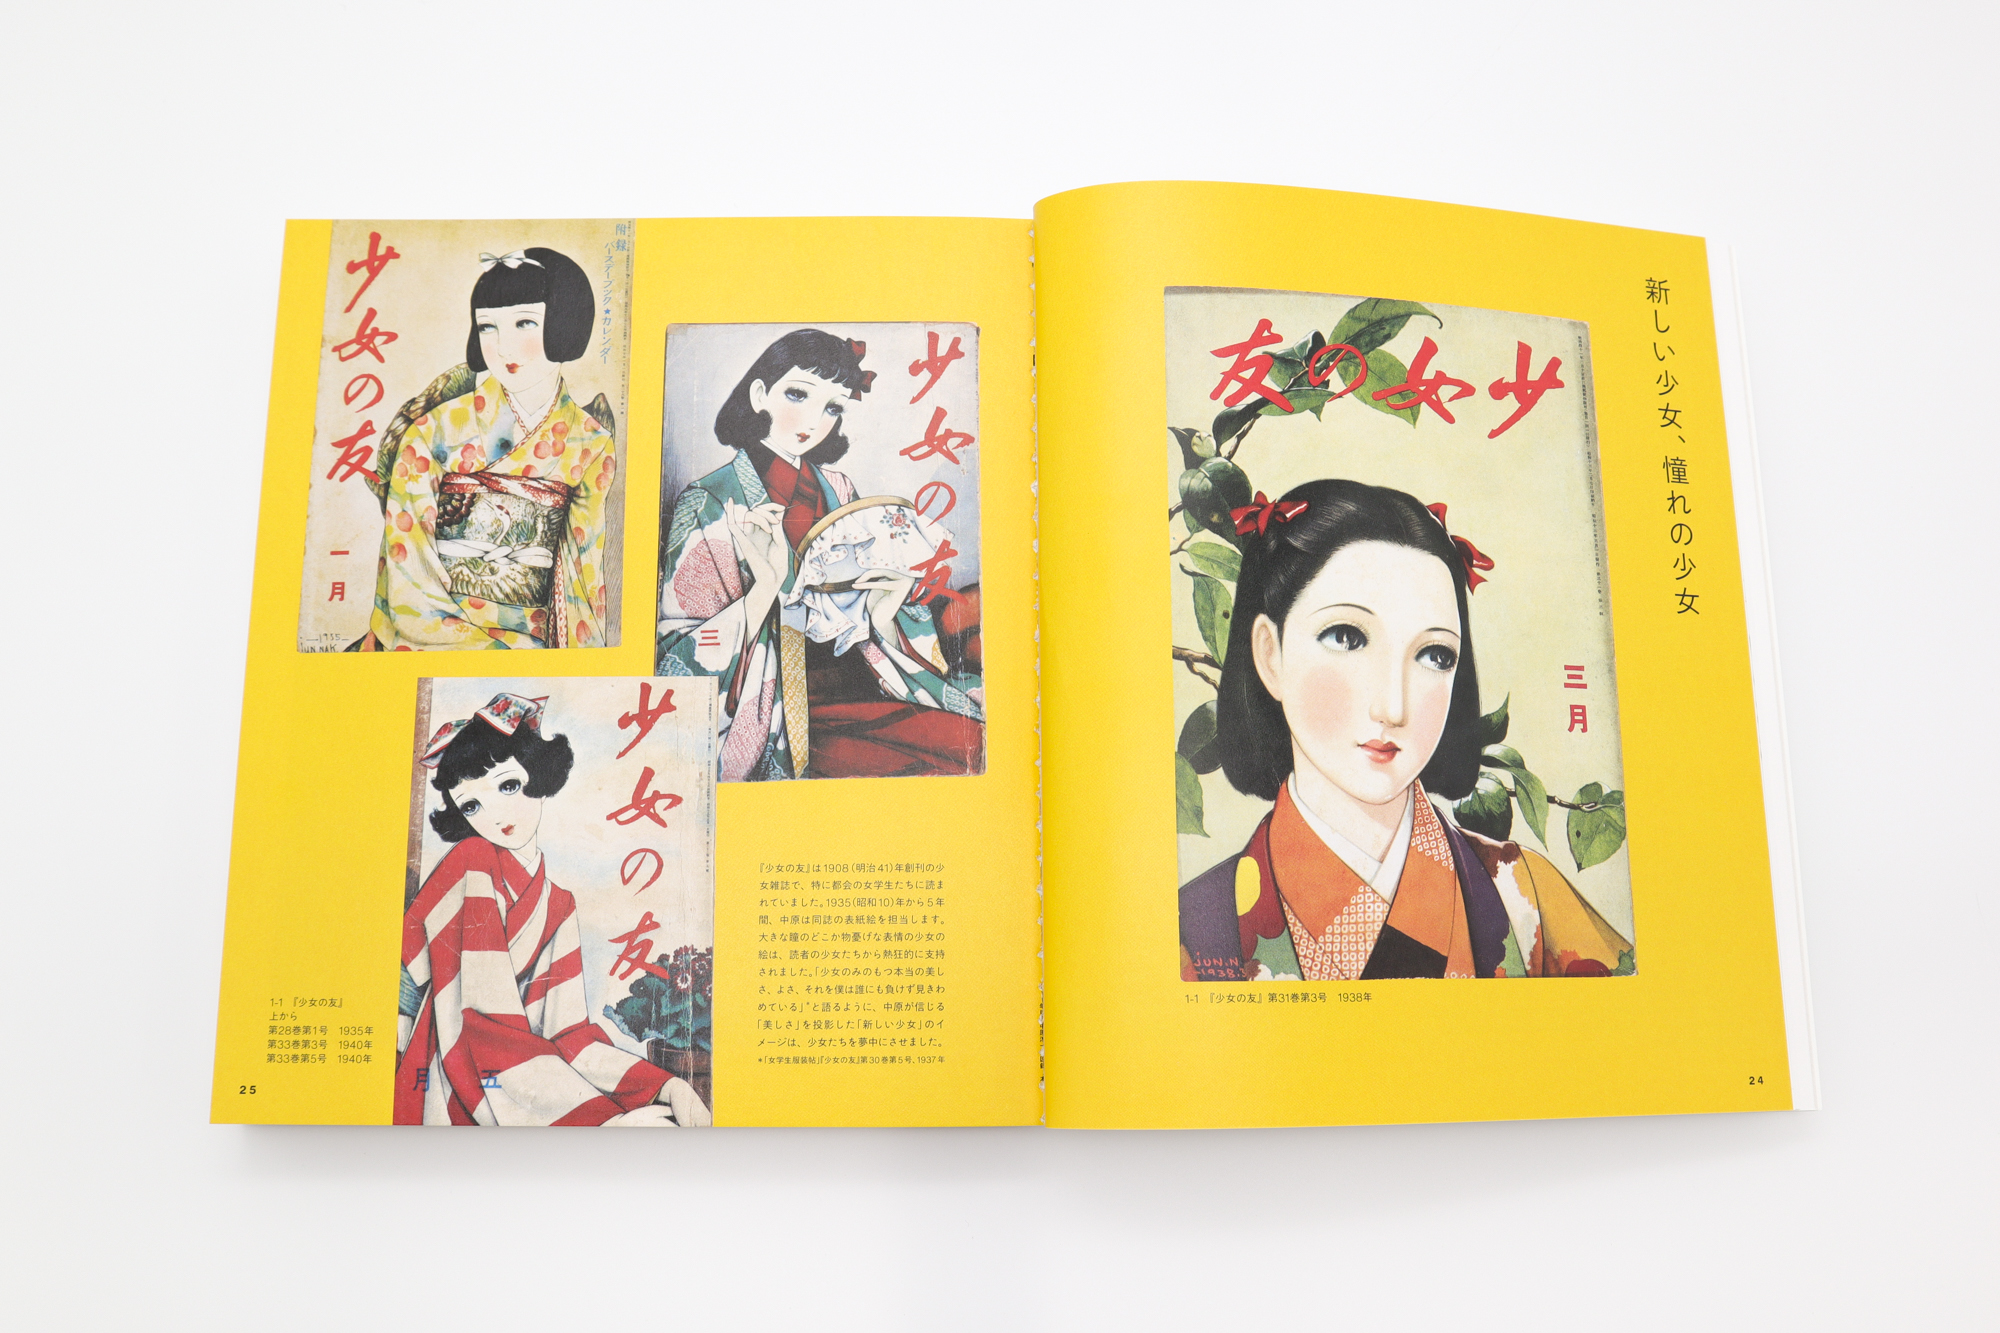 Junichi Nakahara: Year 111 | 青幻舎 SEIGENSHA Art Publishing, Inc.